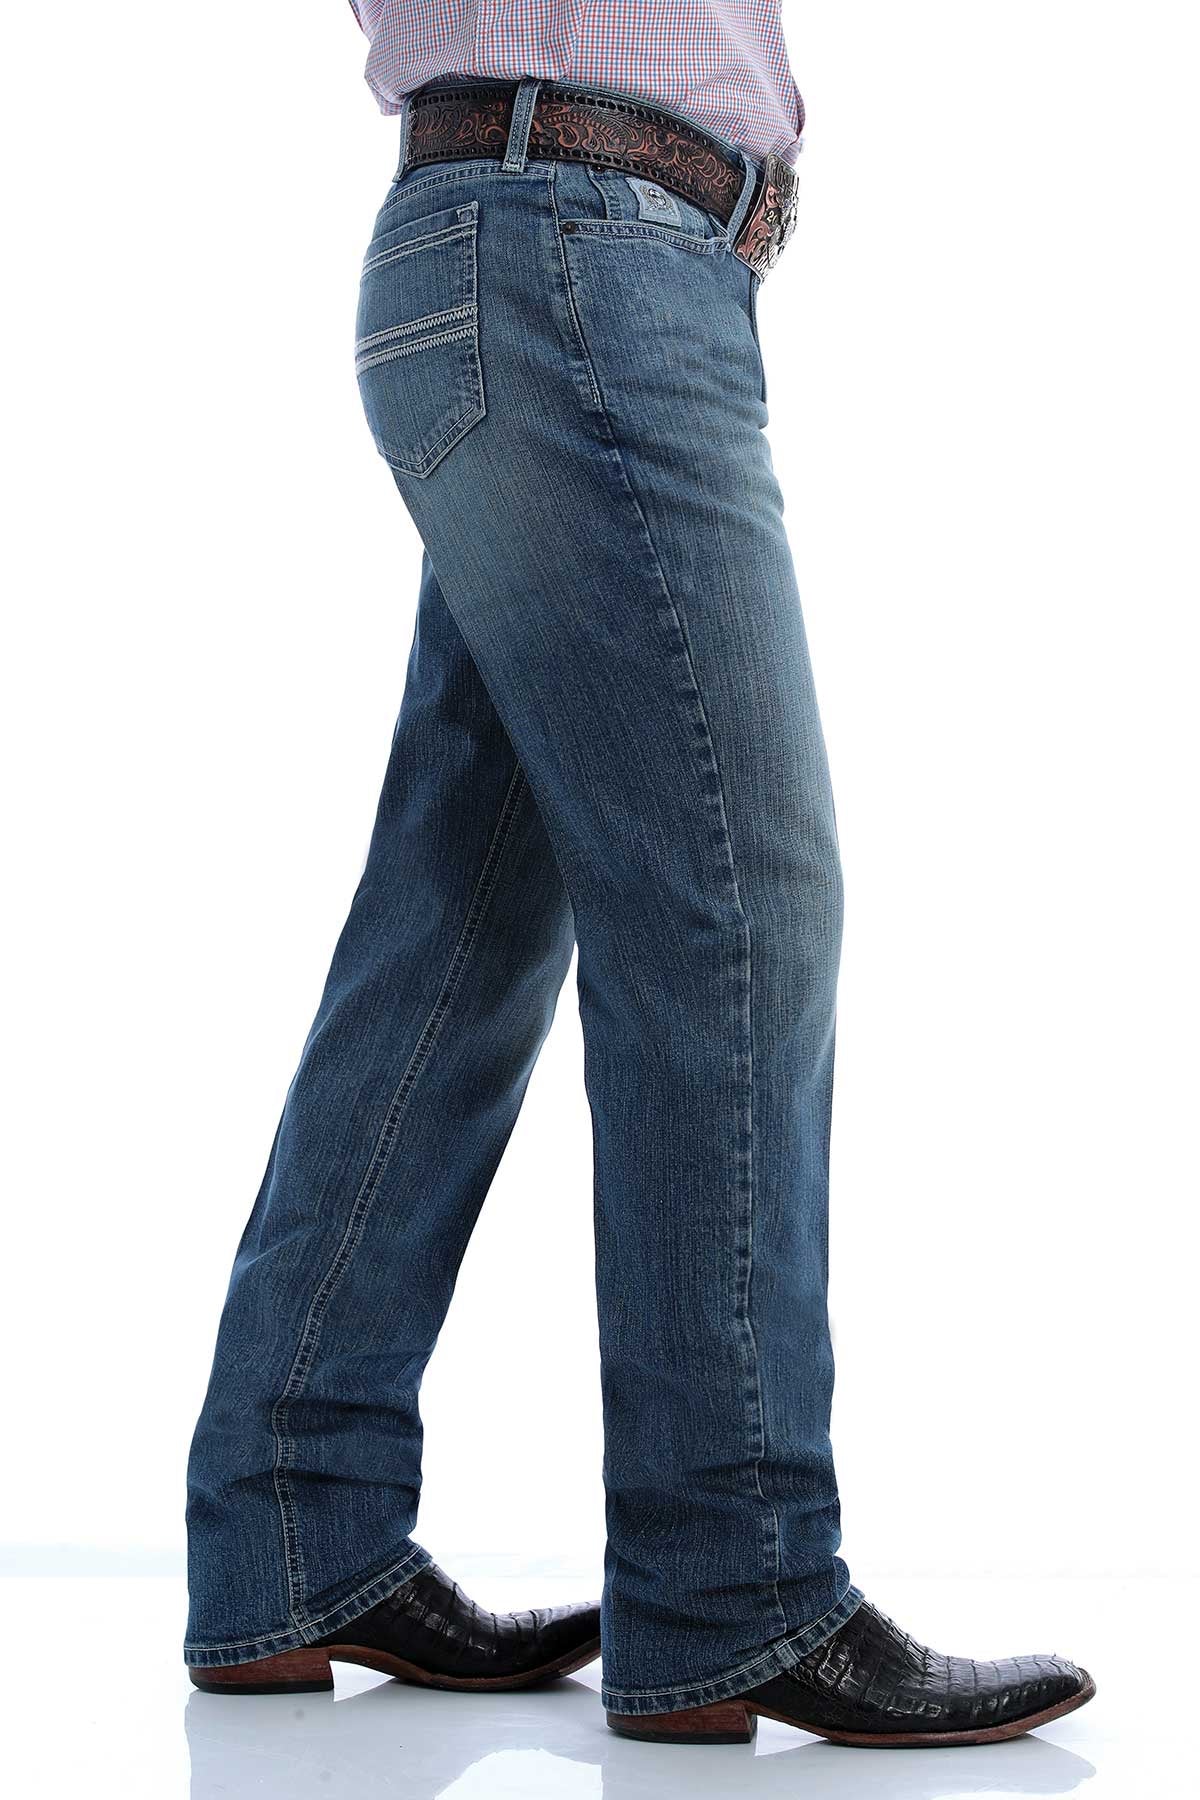 Cinch Slim Fit Silver Label Medium Wash Jeans (4015)